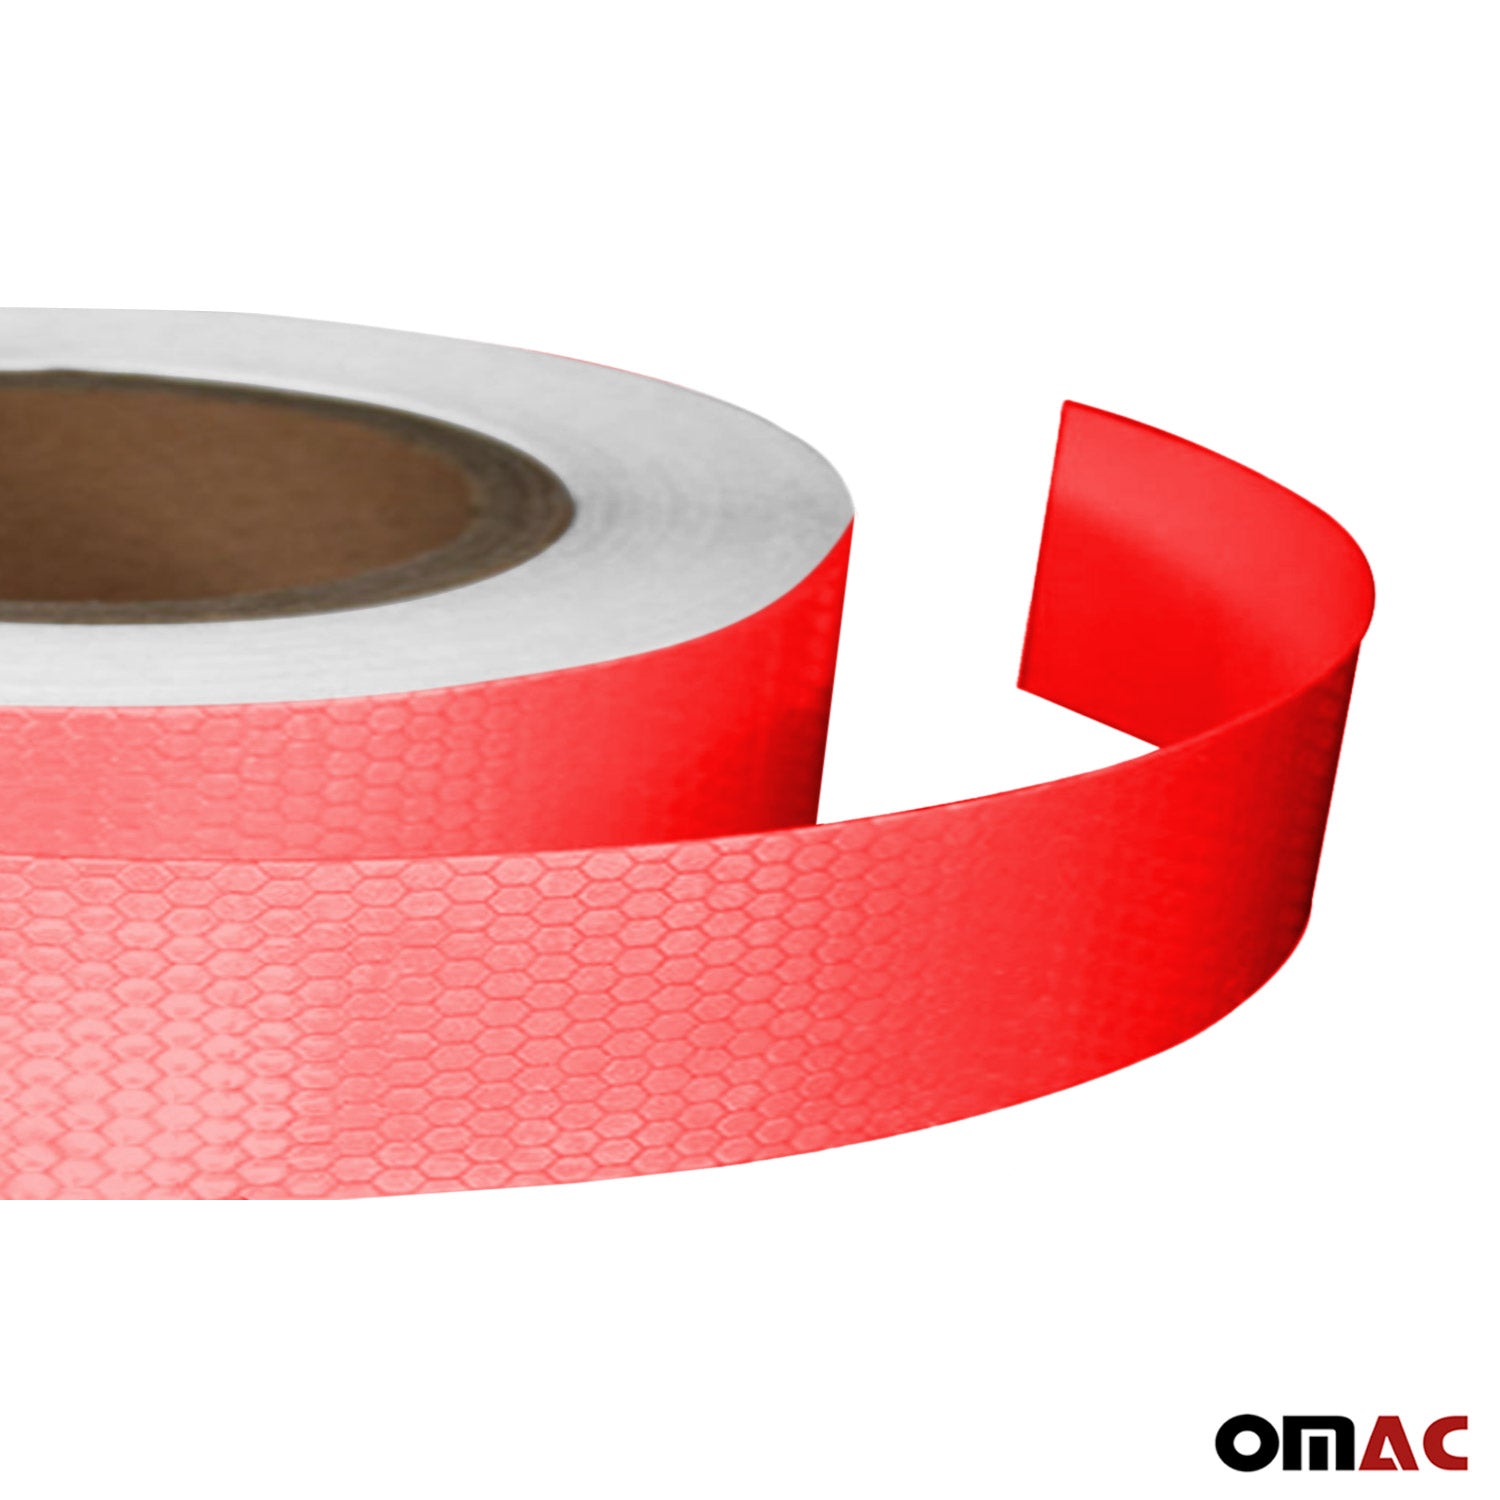 Aufkleber Reflektor Selbstklebeband Streifen Reflektierende Rot 50Mx5cm - Omac Shop GmbH